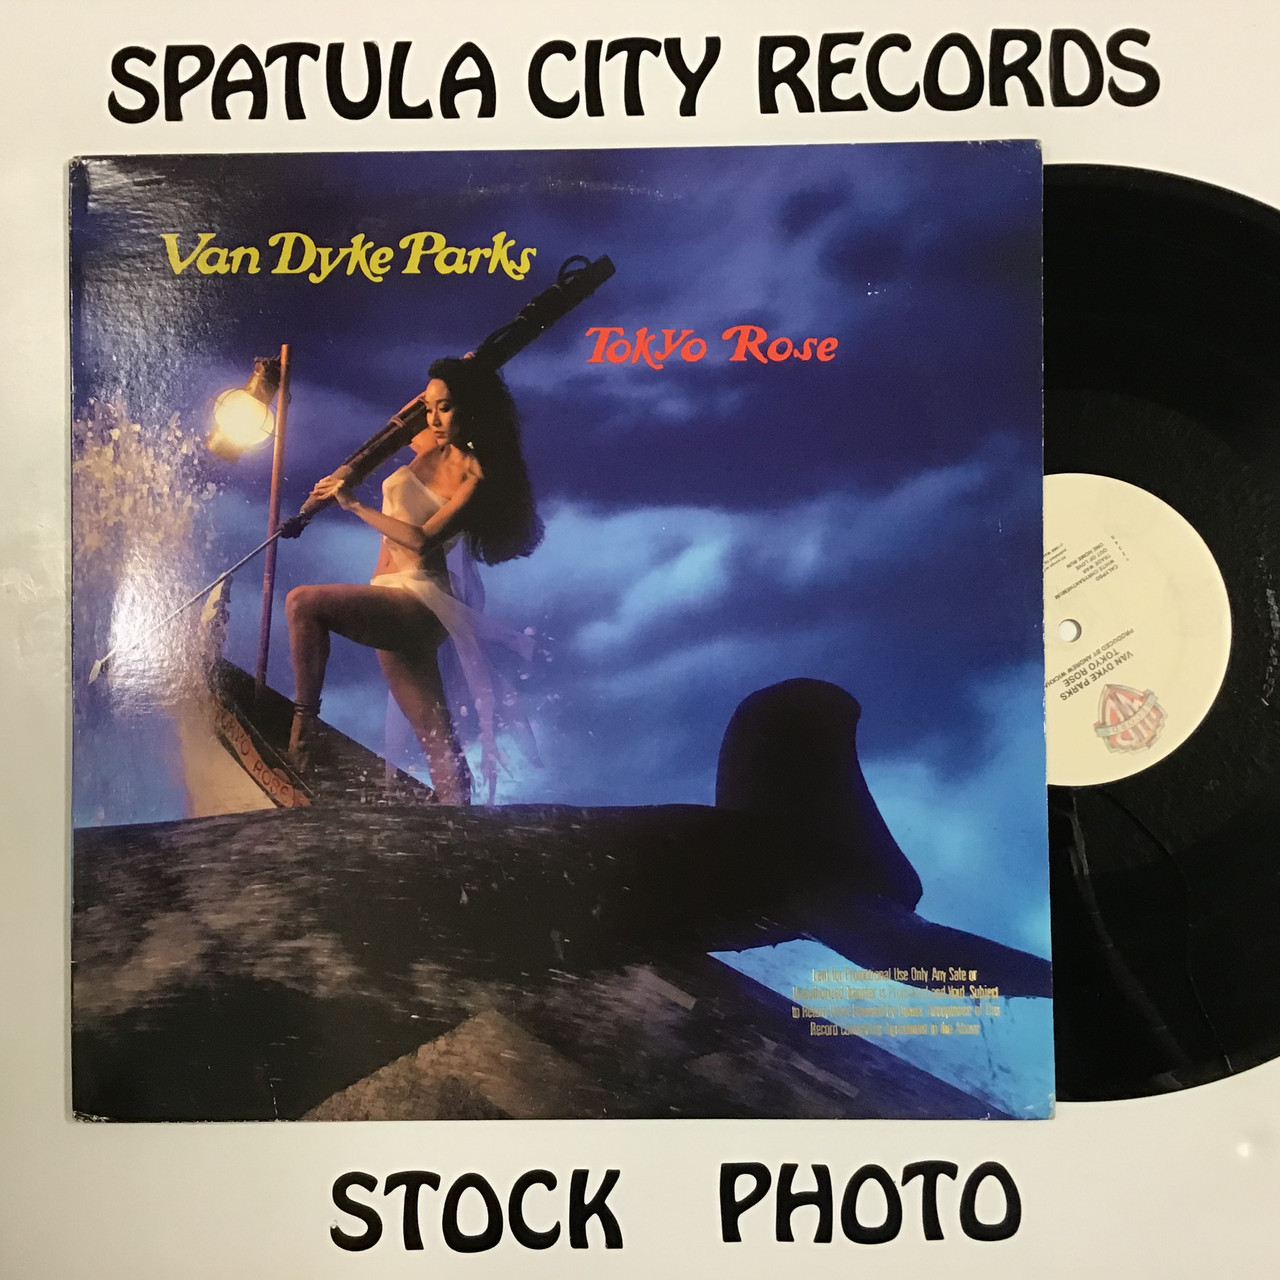 Van Dyke Parks - Tokyo Rose - vinyl record LP